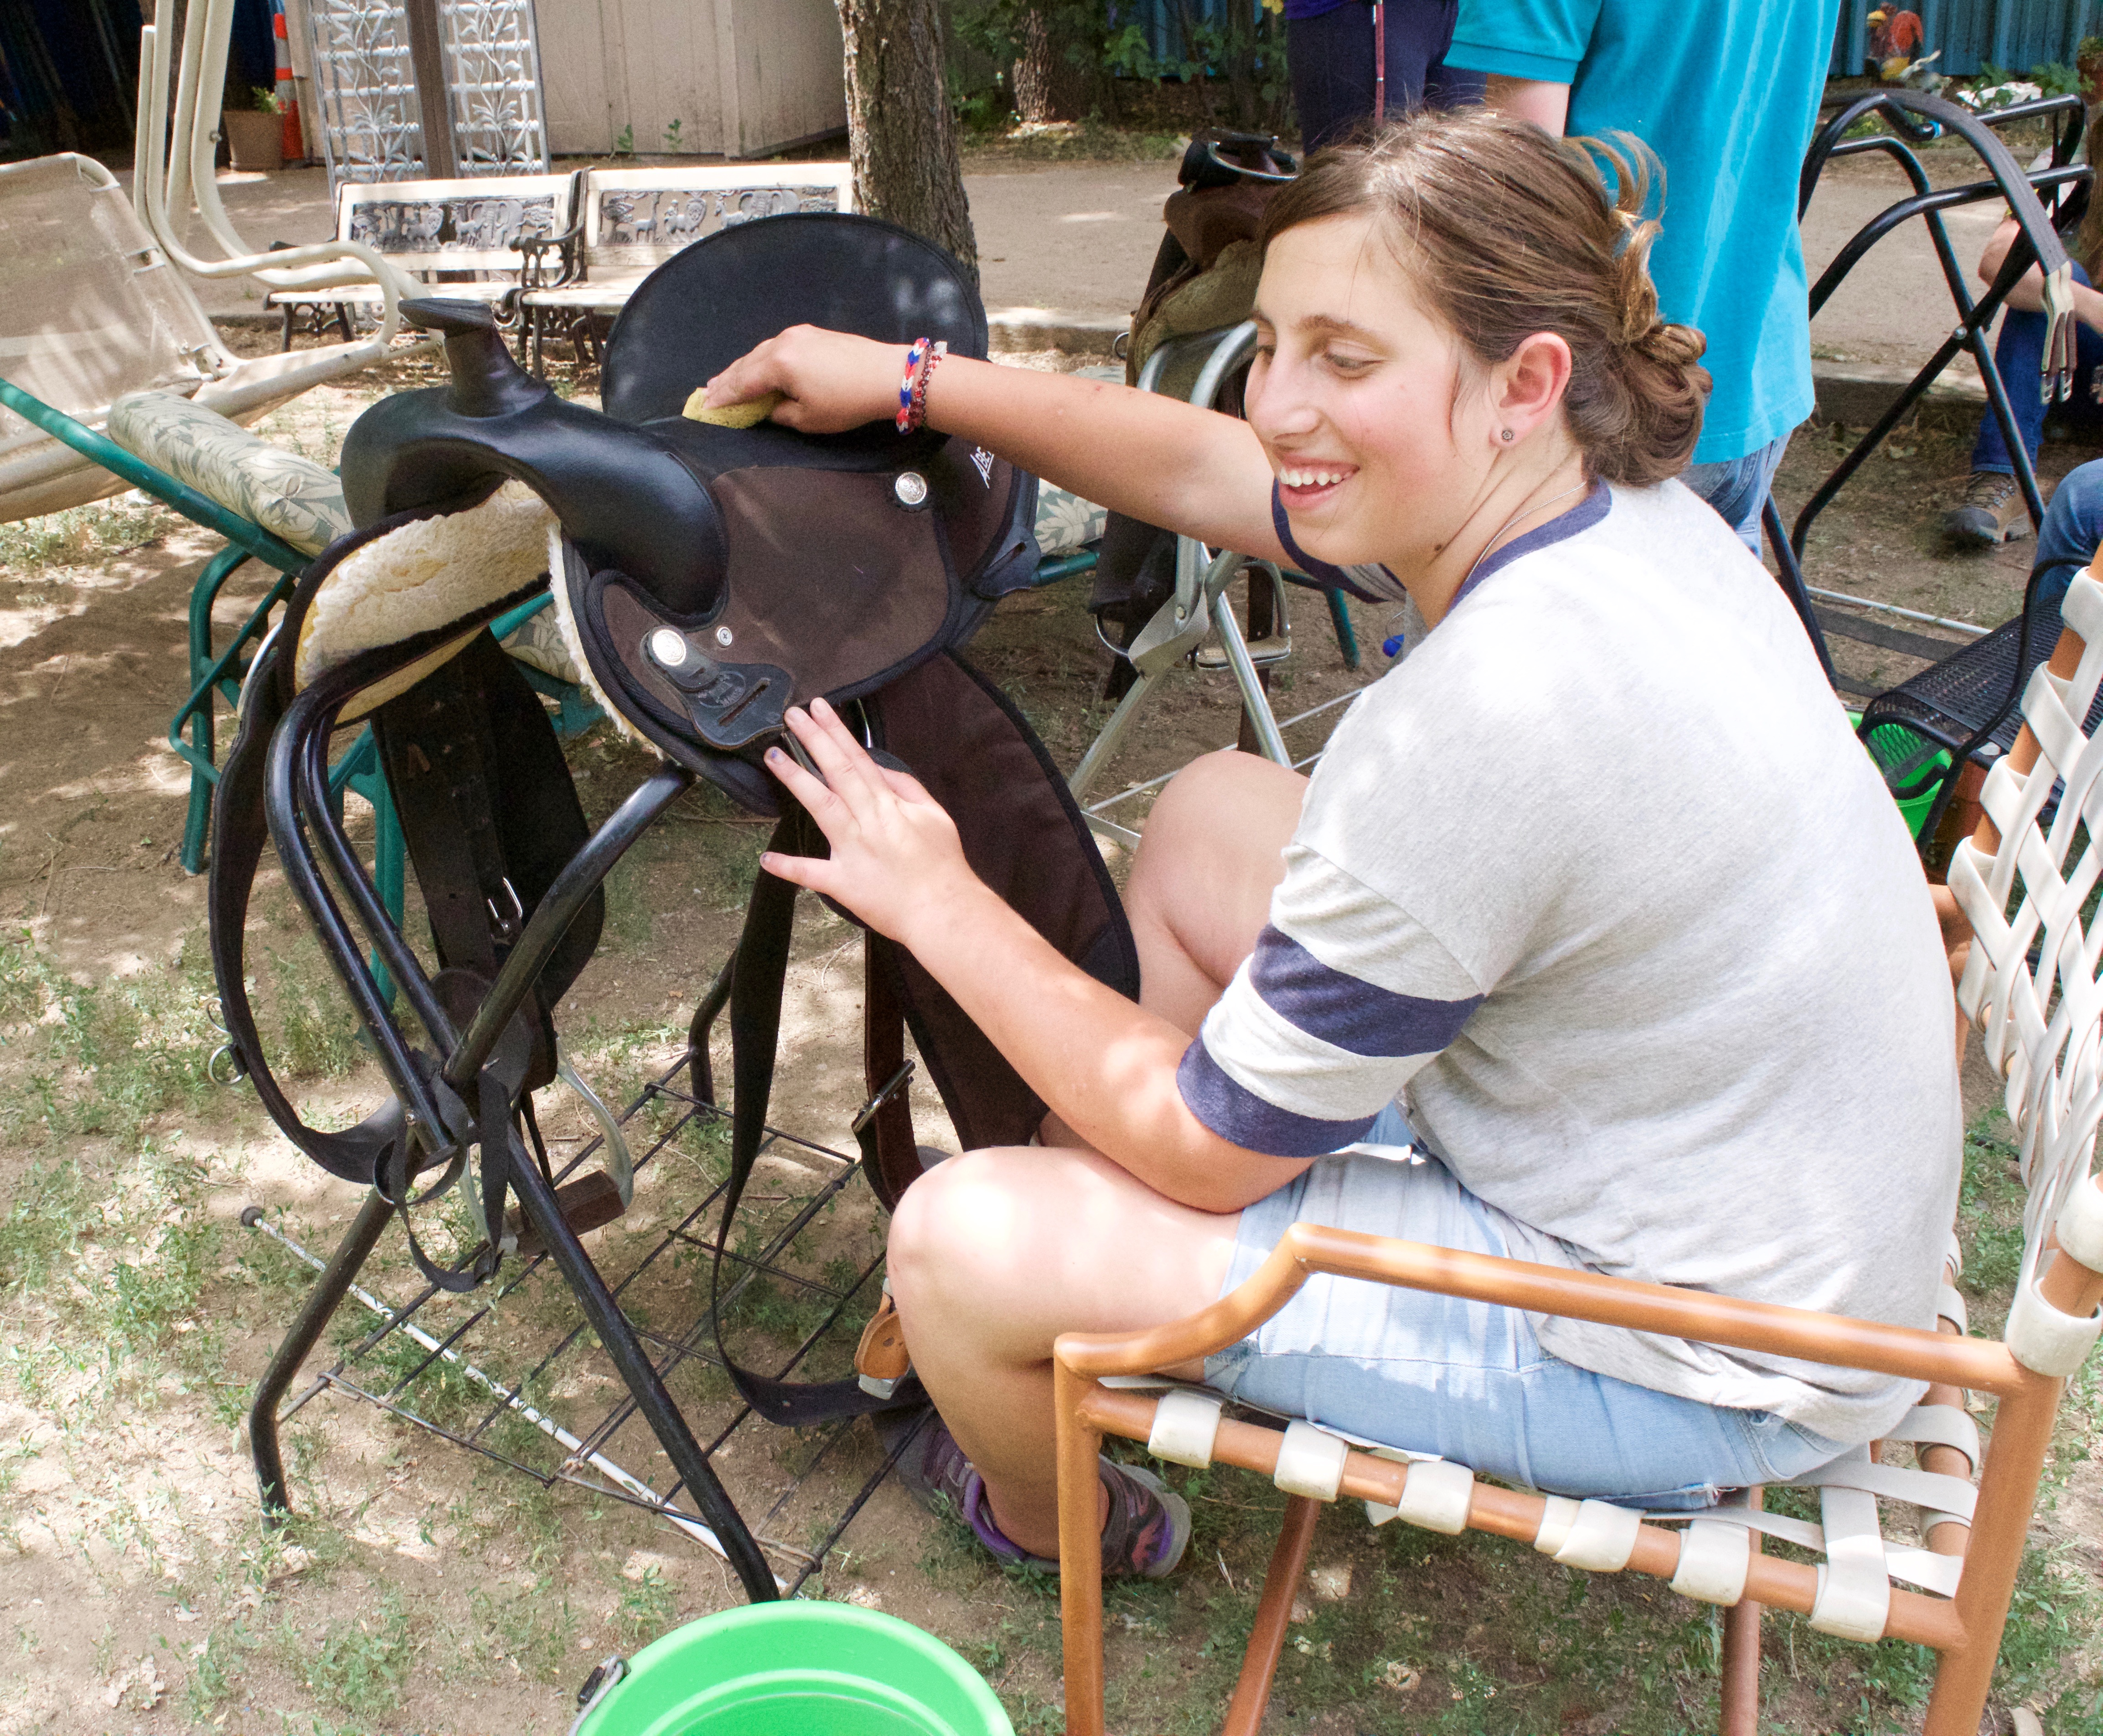 Christina works on cleaning and polishing a saddle